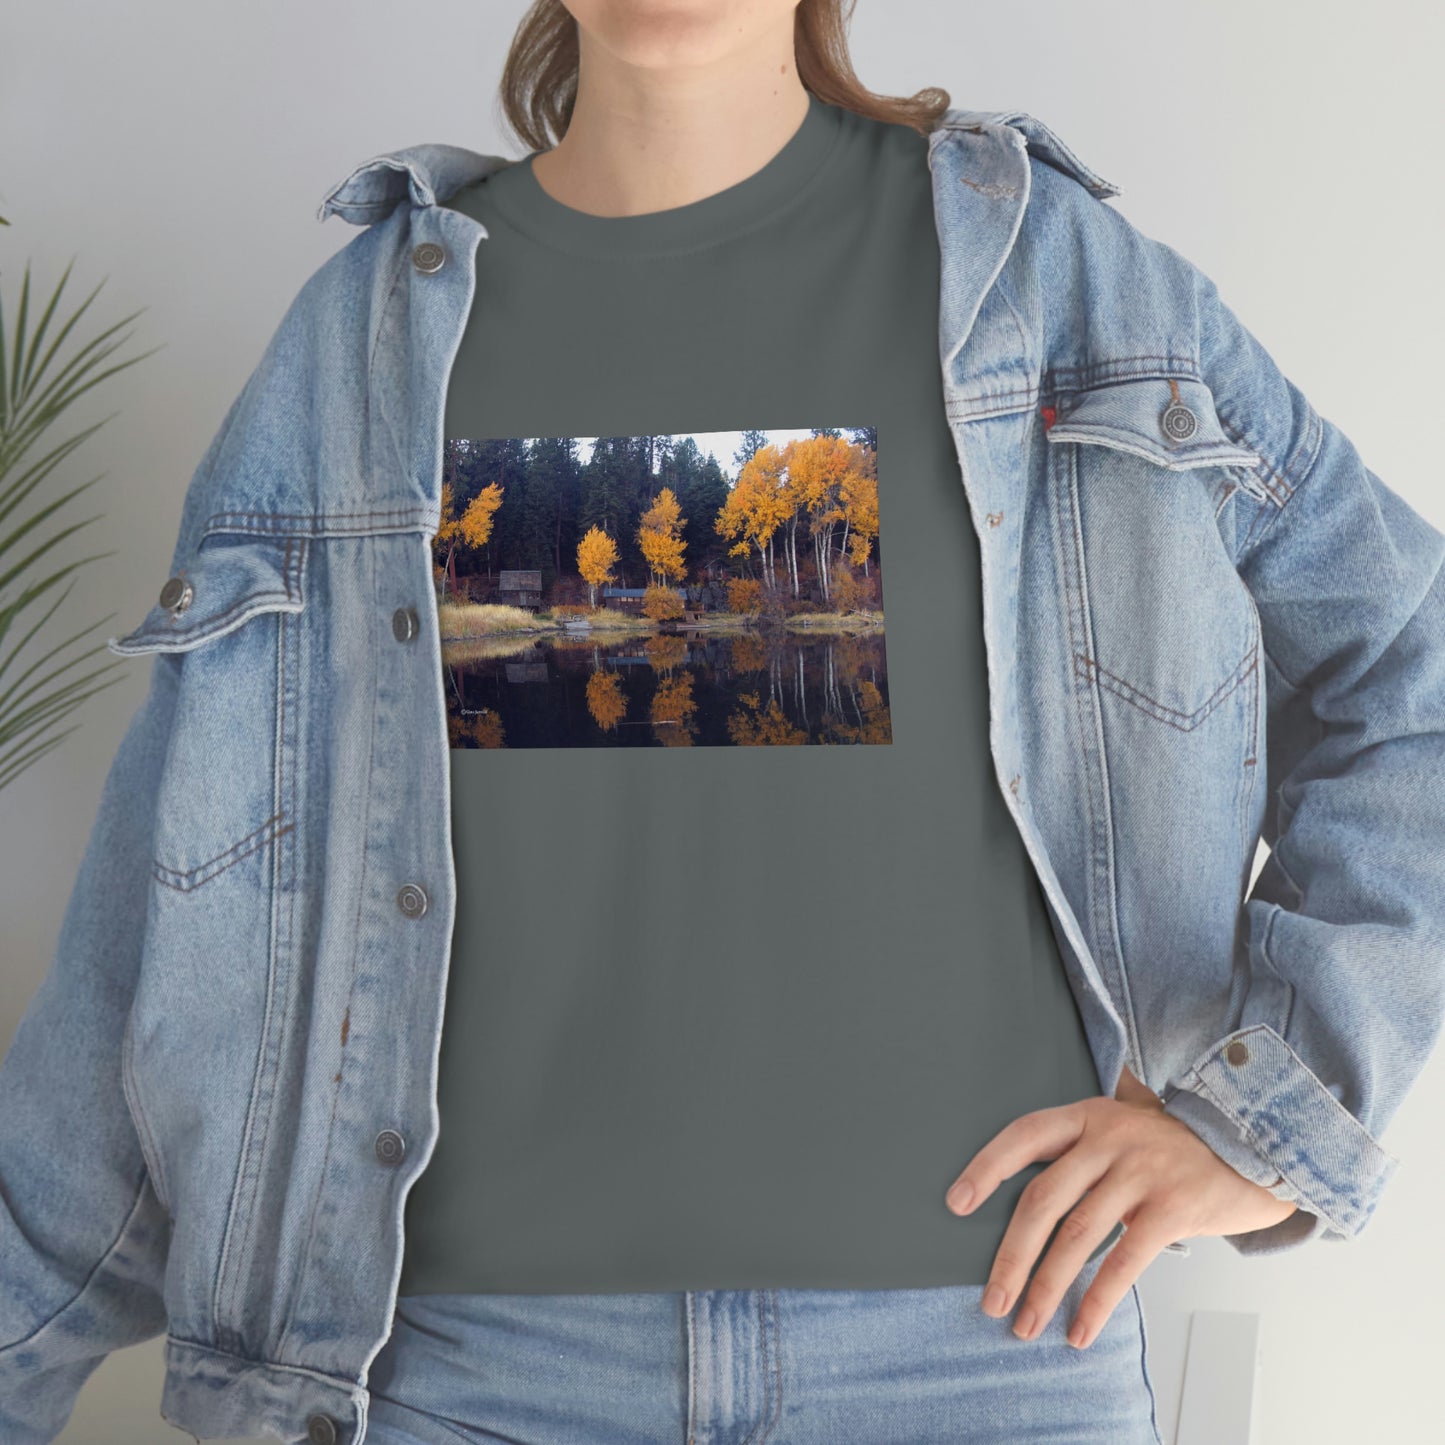 Rocky Point, Klamath Falls, Or. T - Shirt